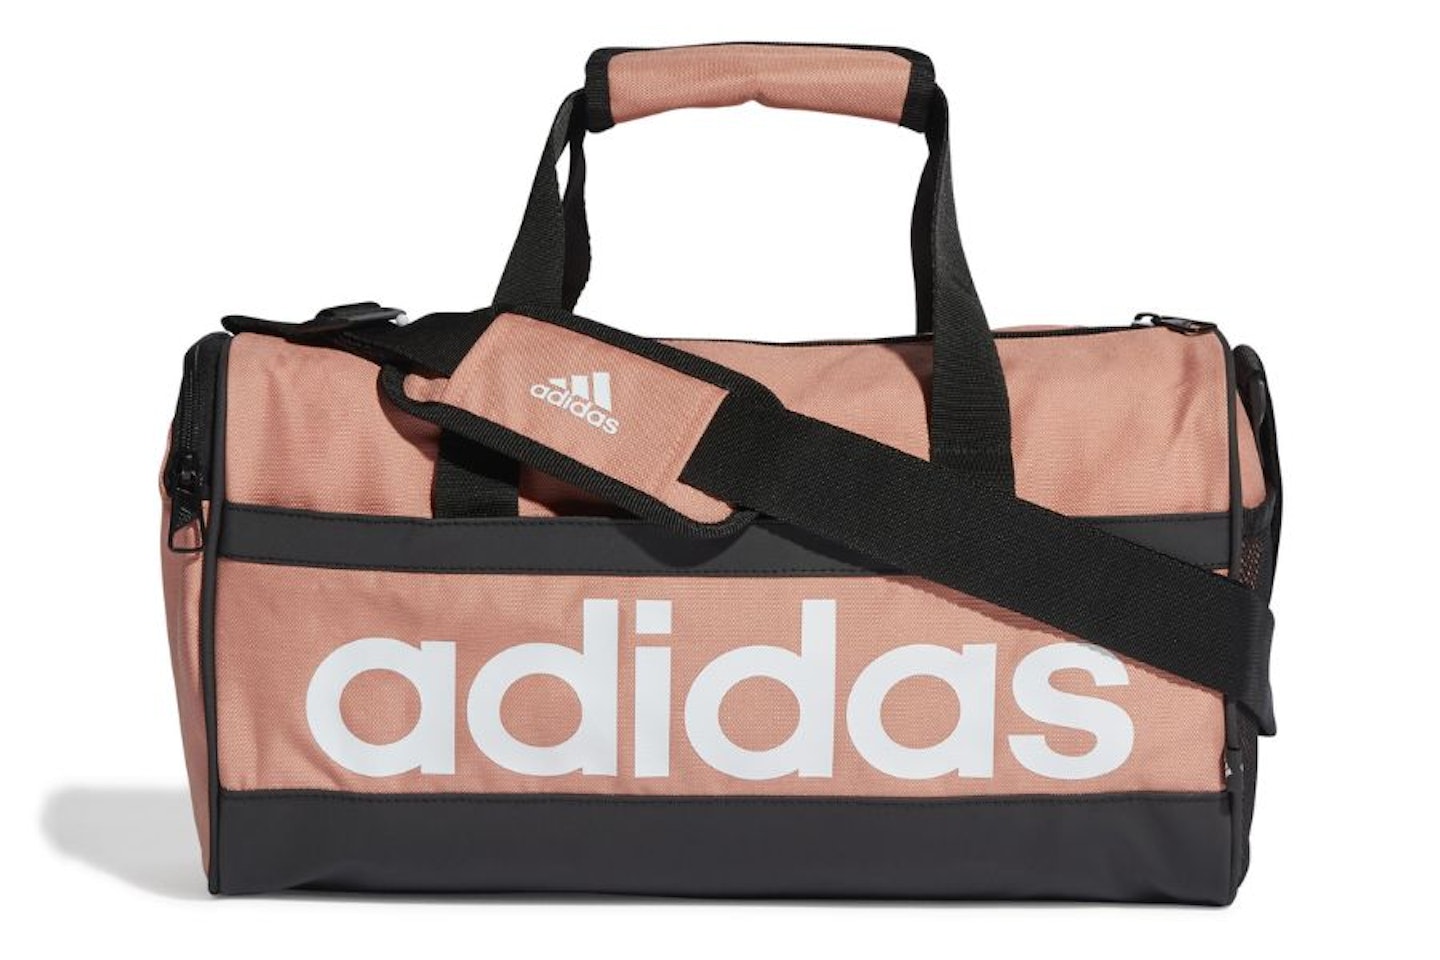 Adidas XS Duffel Bag - best Black Friday fitness deals